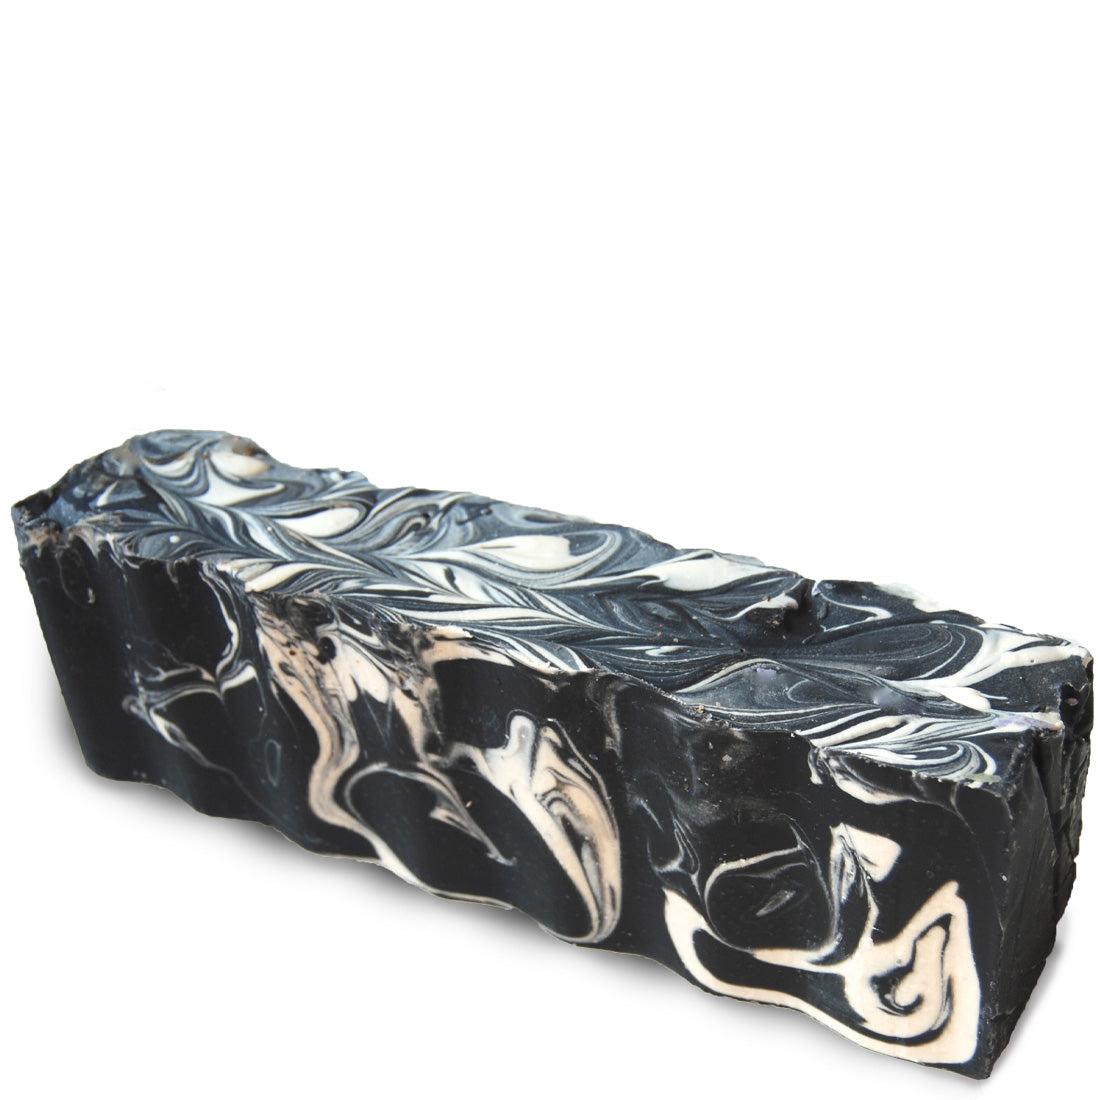 Rectangular black and white wavy 45 ounce brick of Cedar Zum Bar Soap